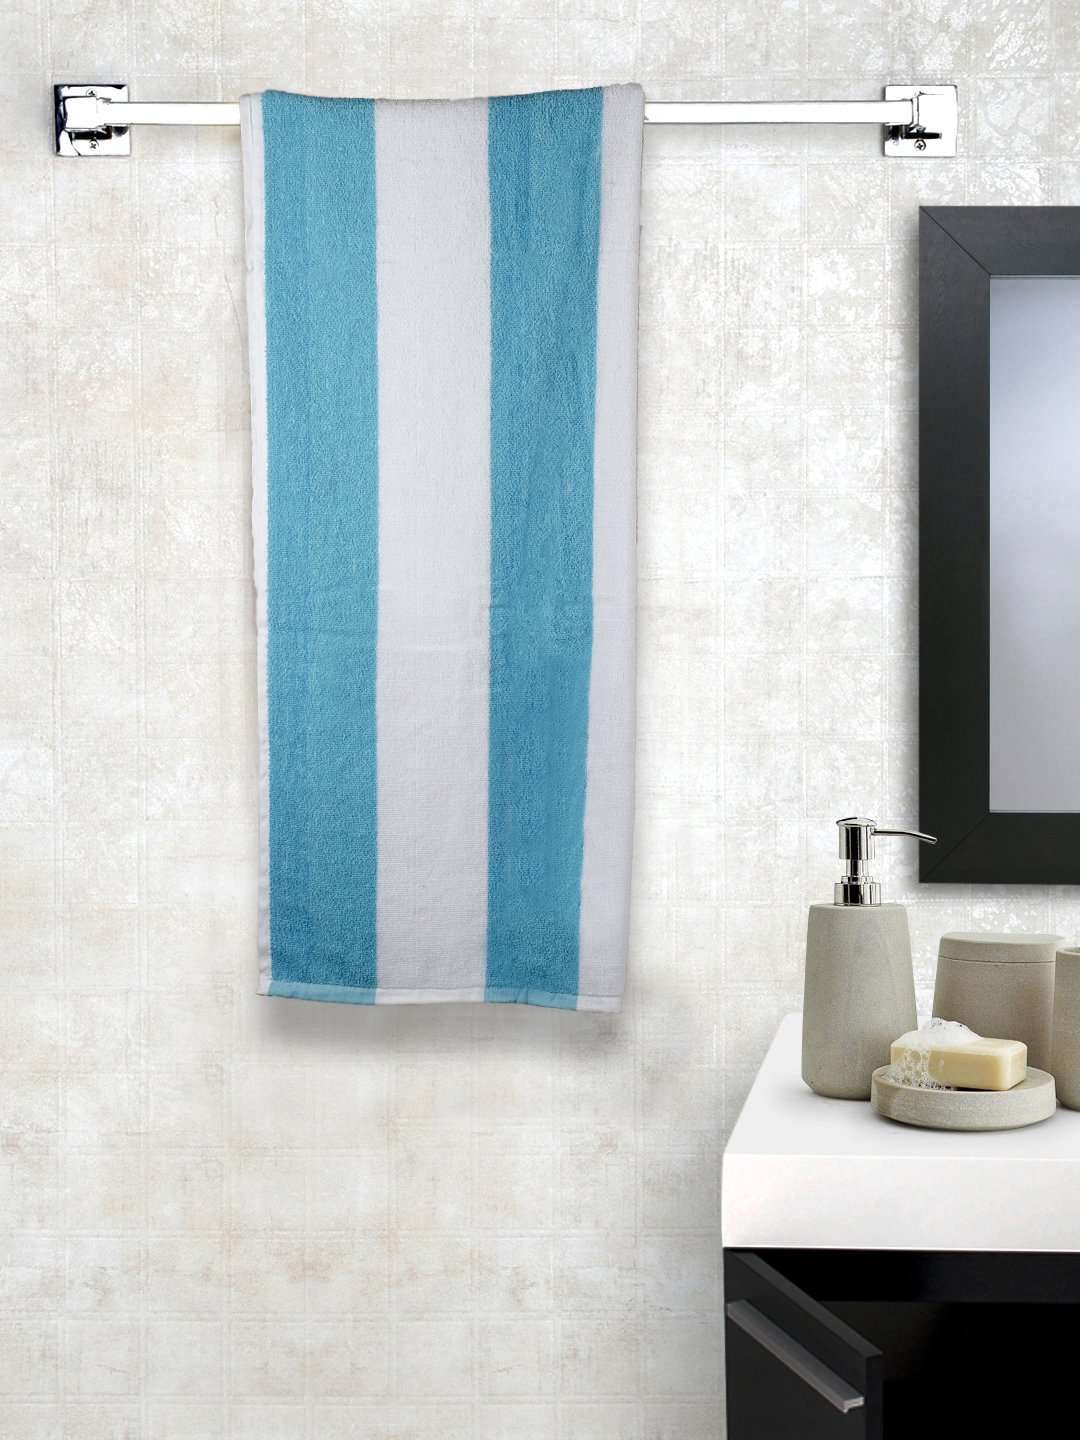 Turkish Bath Premium Cotton Stripe Bath and Pool Towel : Sky Blue - SWHF